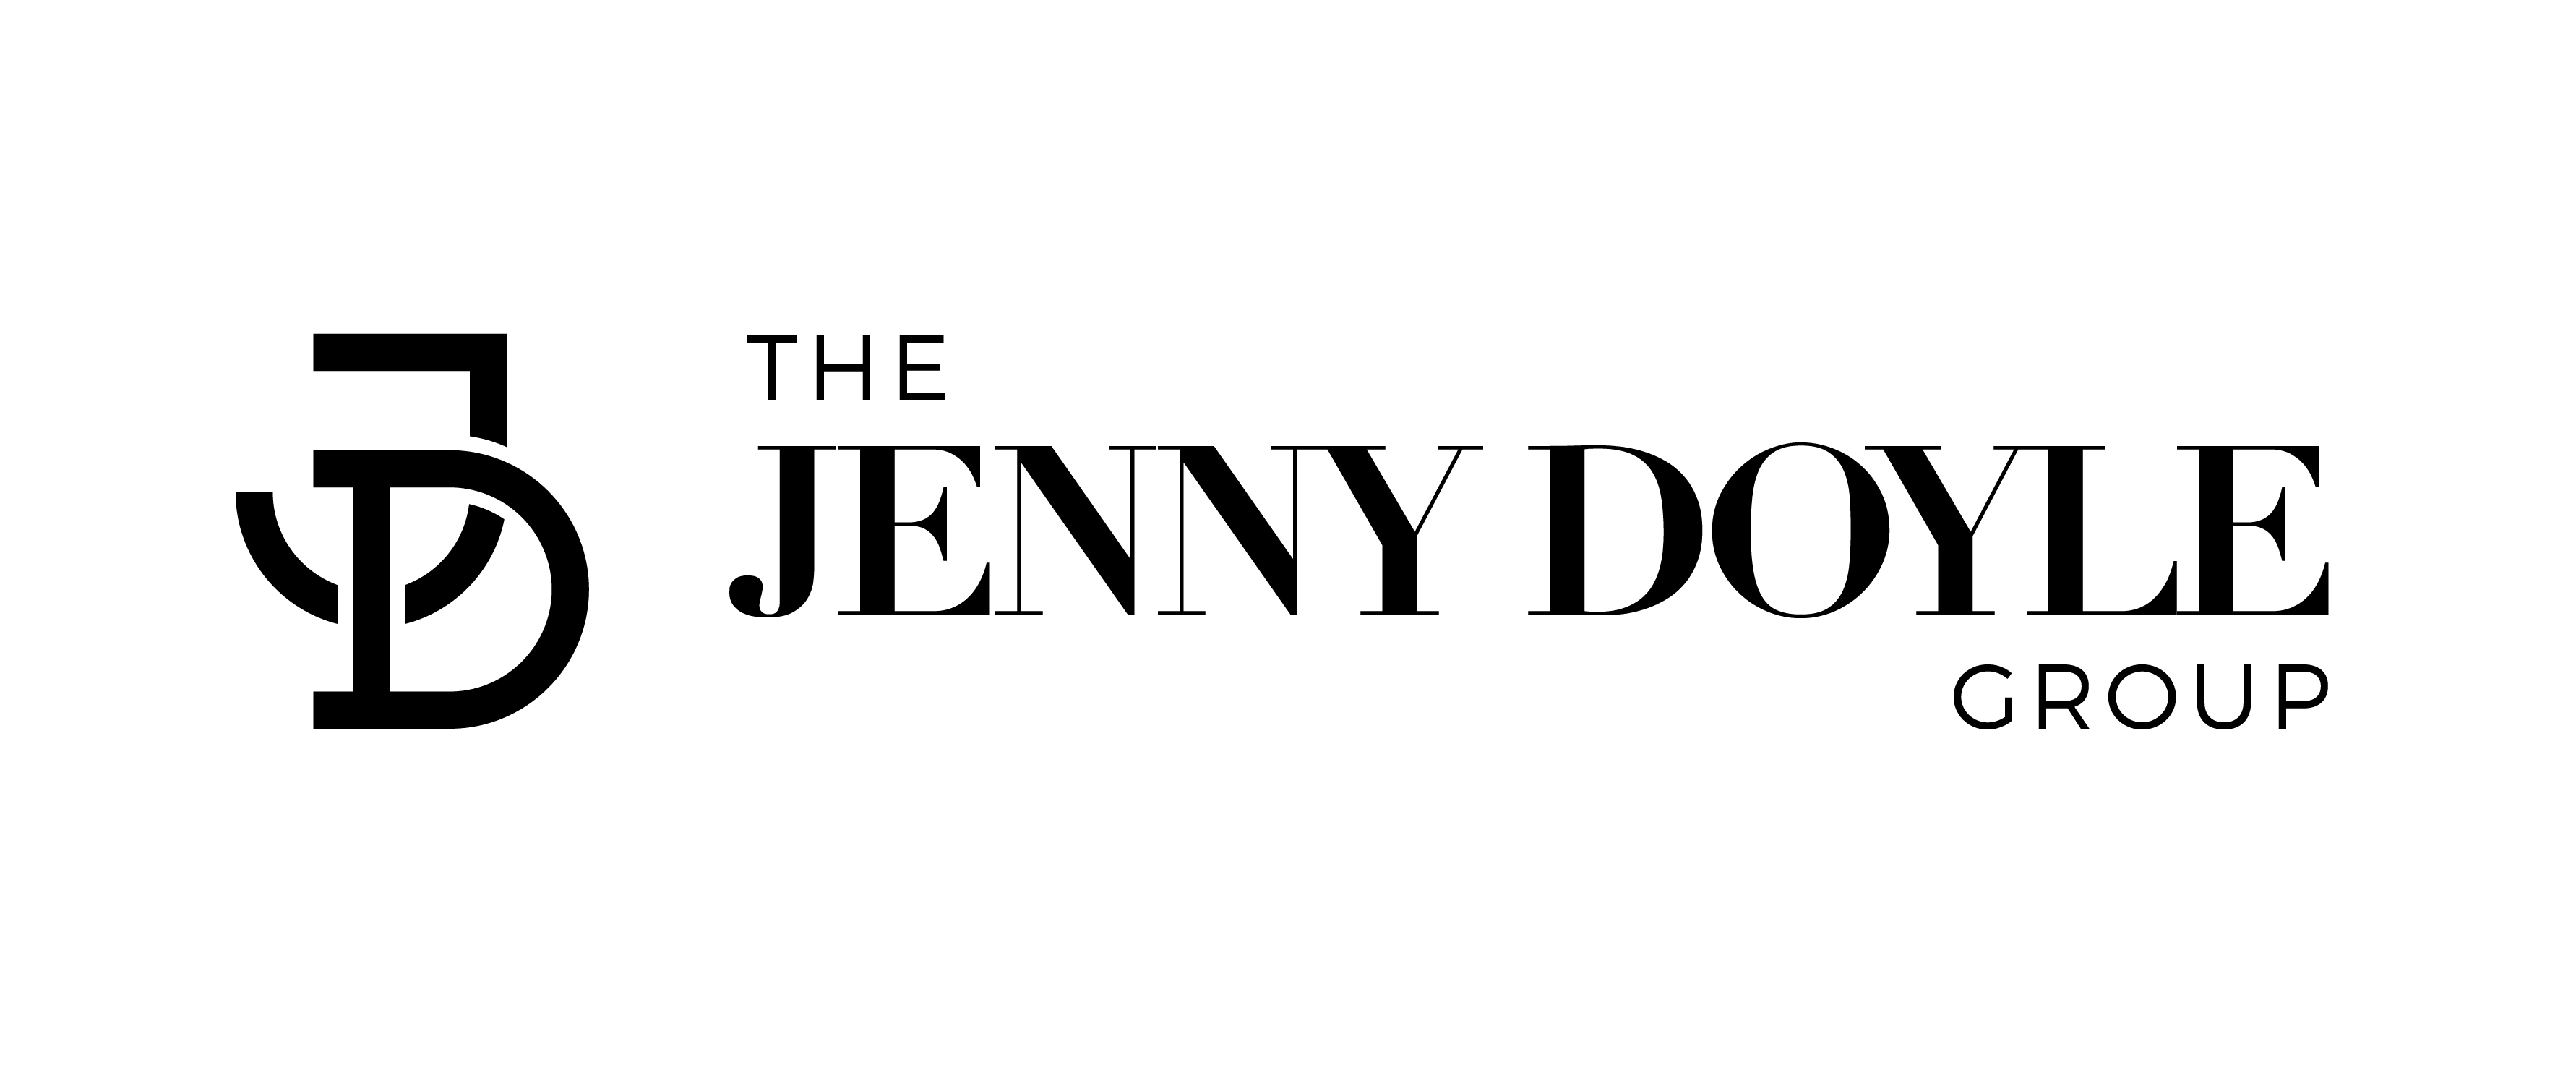 The Jenny Doyle Group_logo.jpg